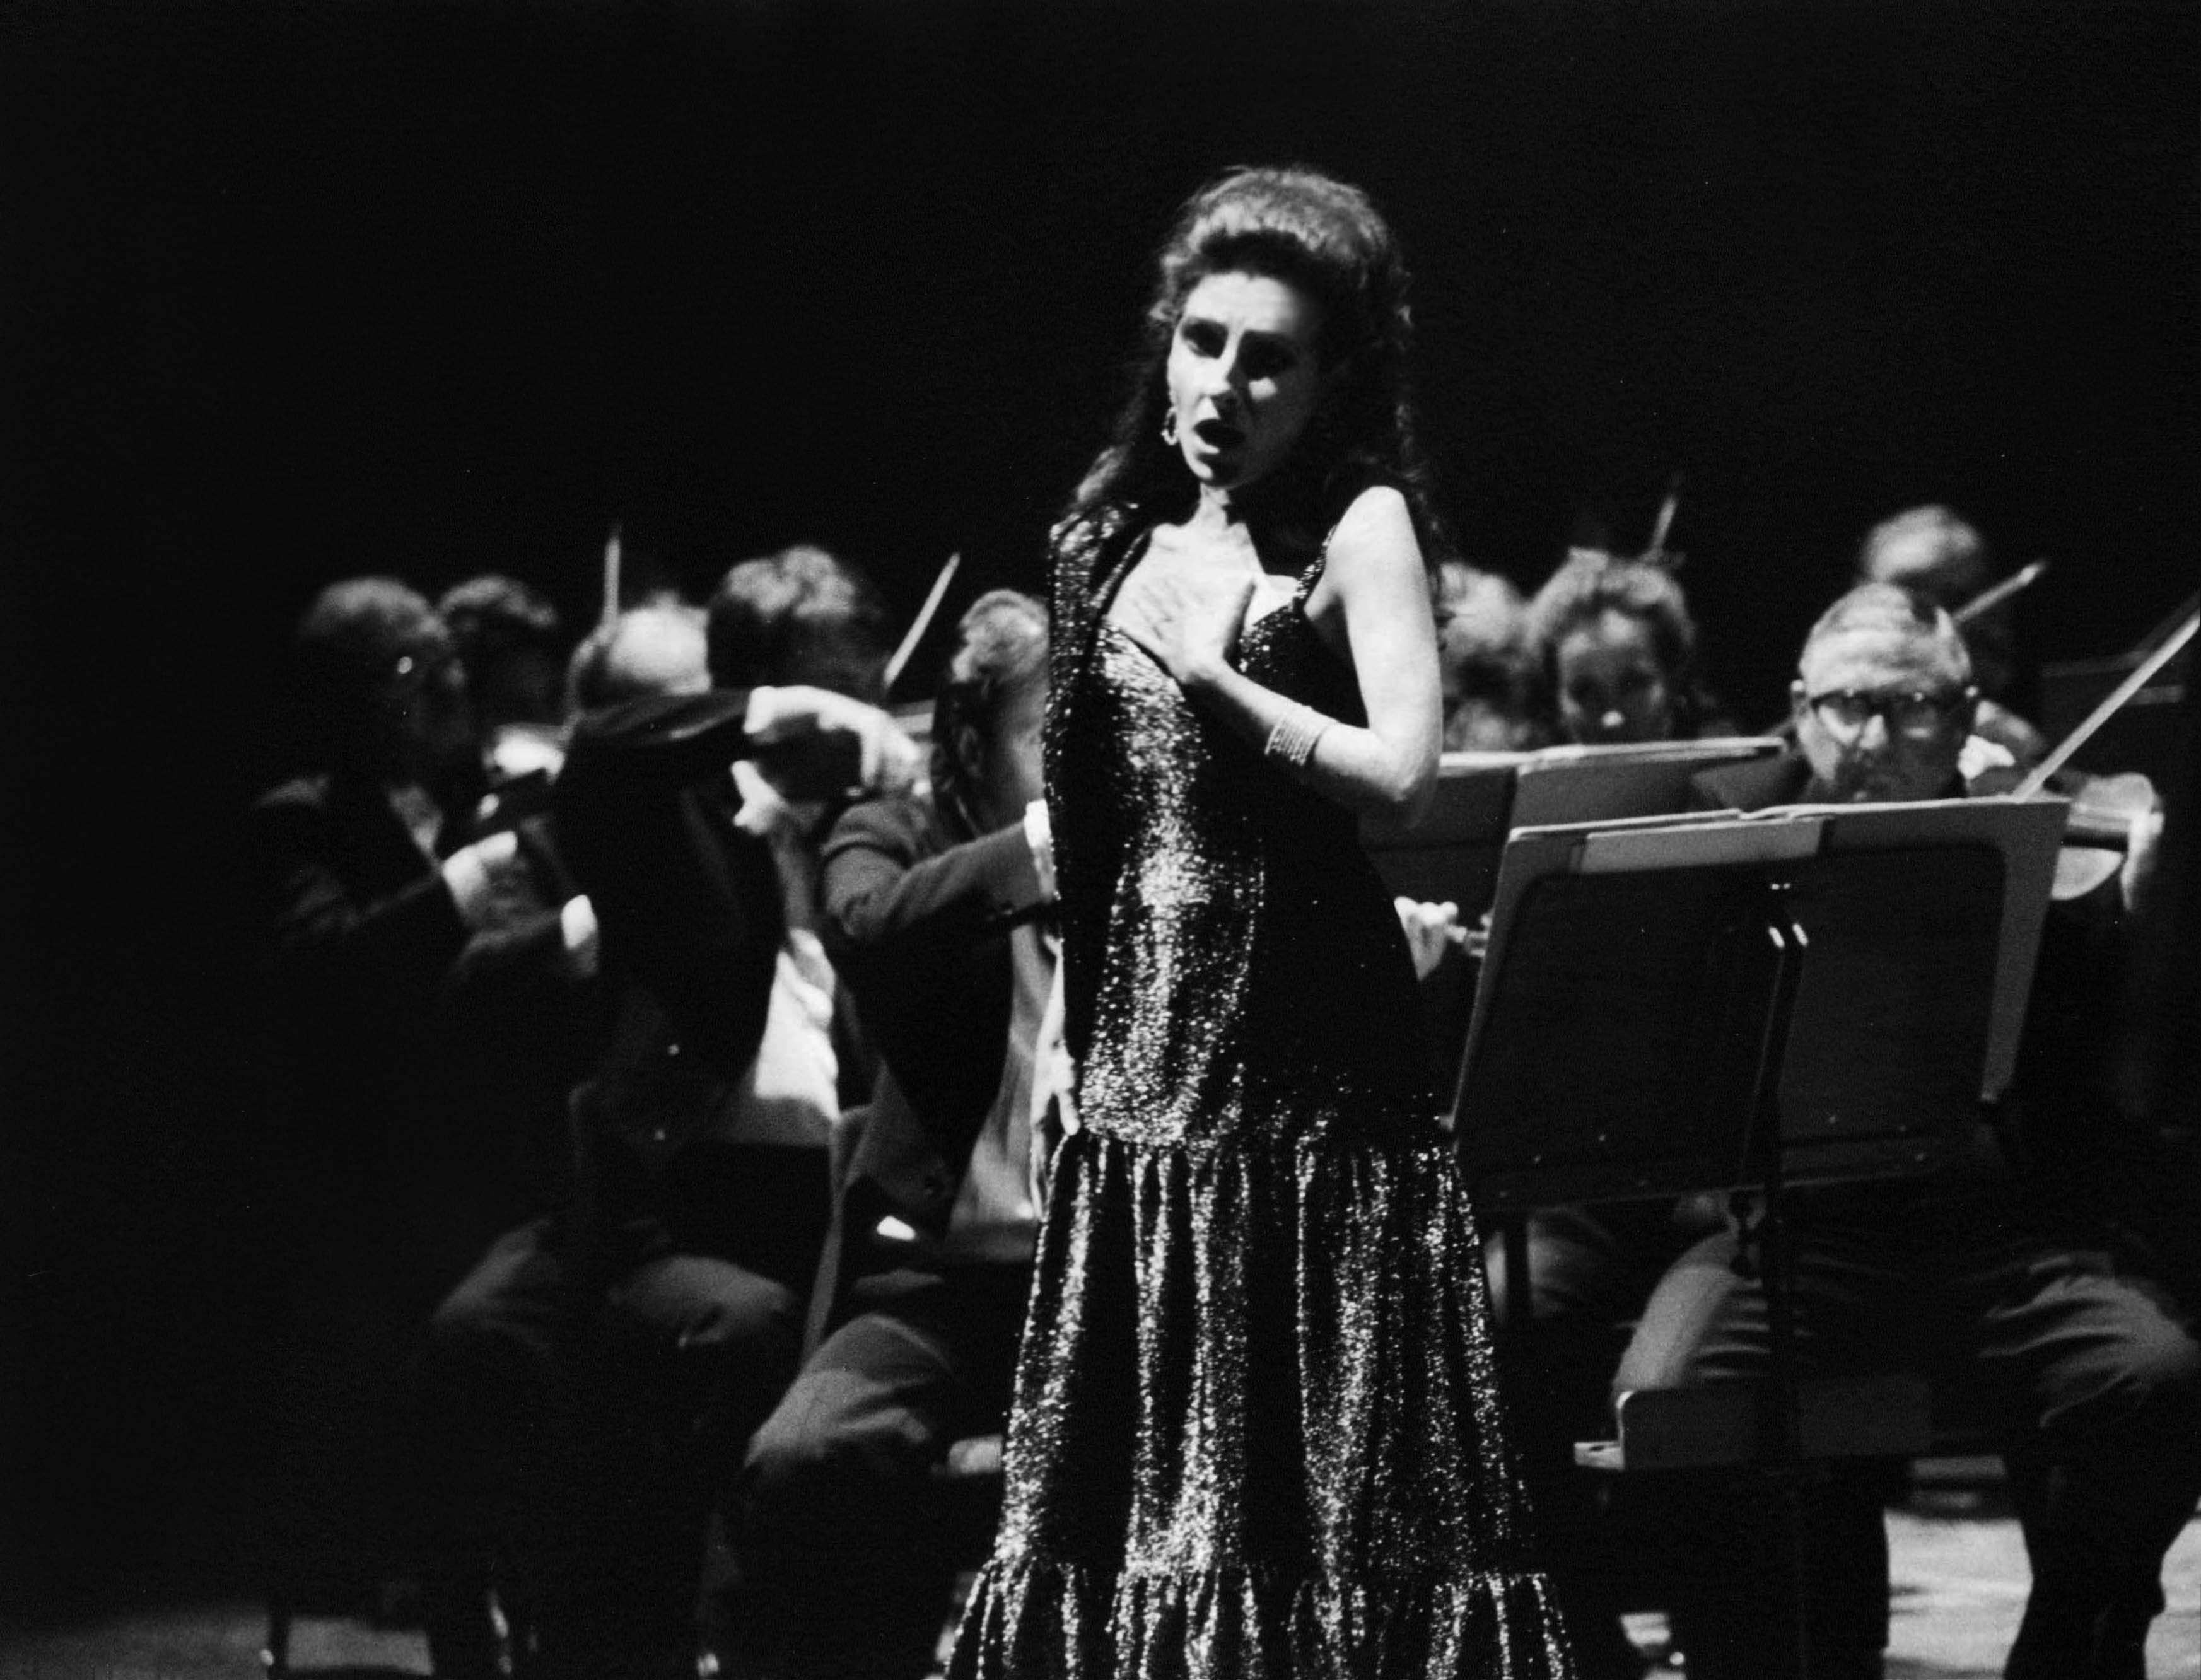 Lucia Aliberti with the conductor Garcia Navarro⚘Deutsche Oper Berlin⚘Gala Concert⚘Berlin⚘On Stage⚘:http://www.luciaaliberti.it #luciaaliberti #deutscheoperberlin #berlin #onstage #concert